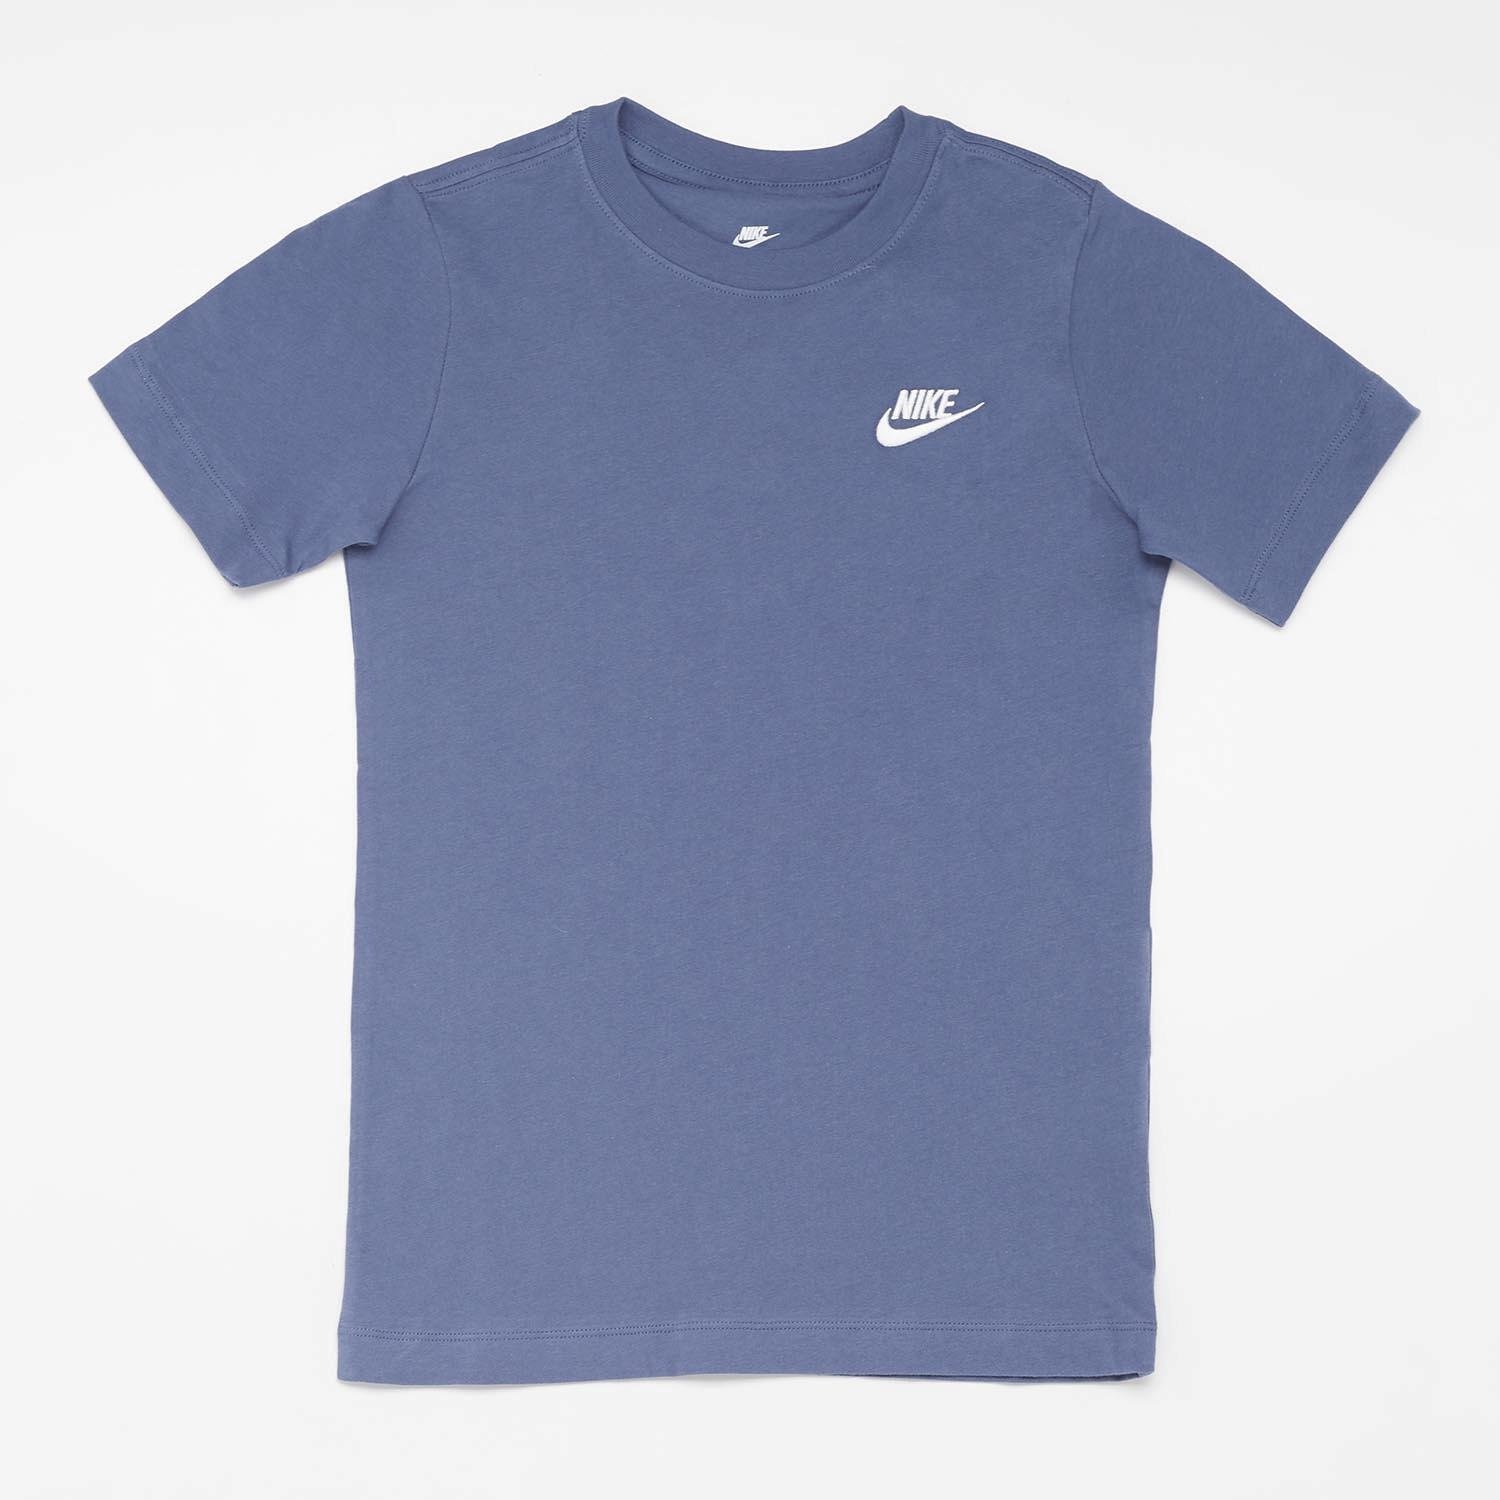 Nike Nike shirt blauw kinderen kinderen